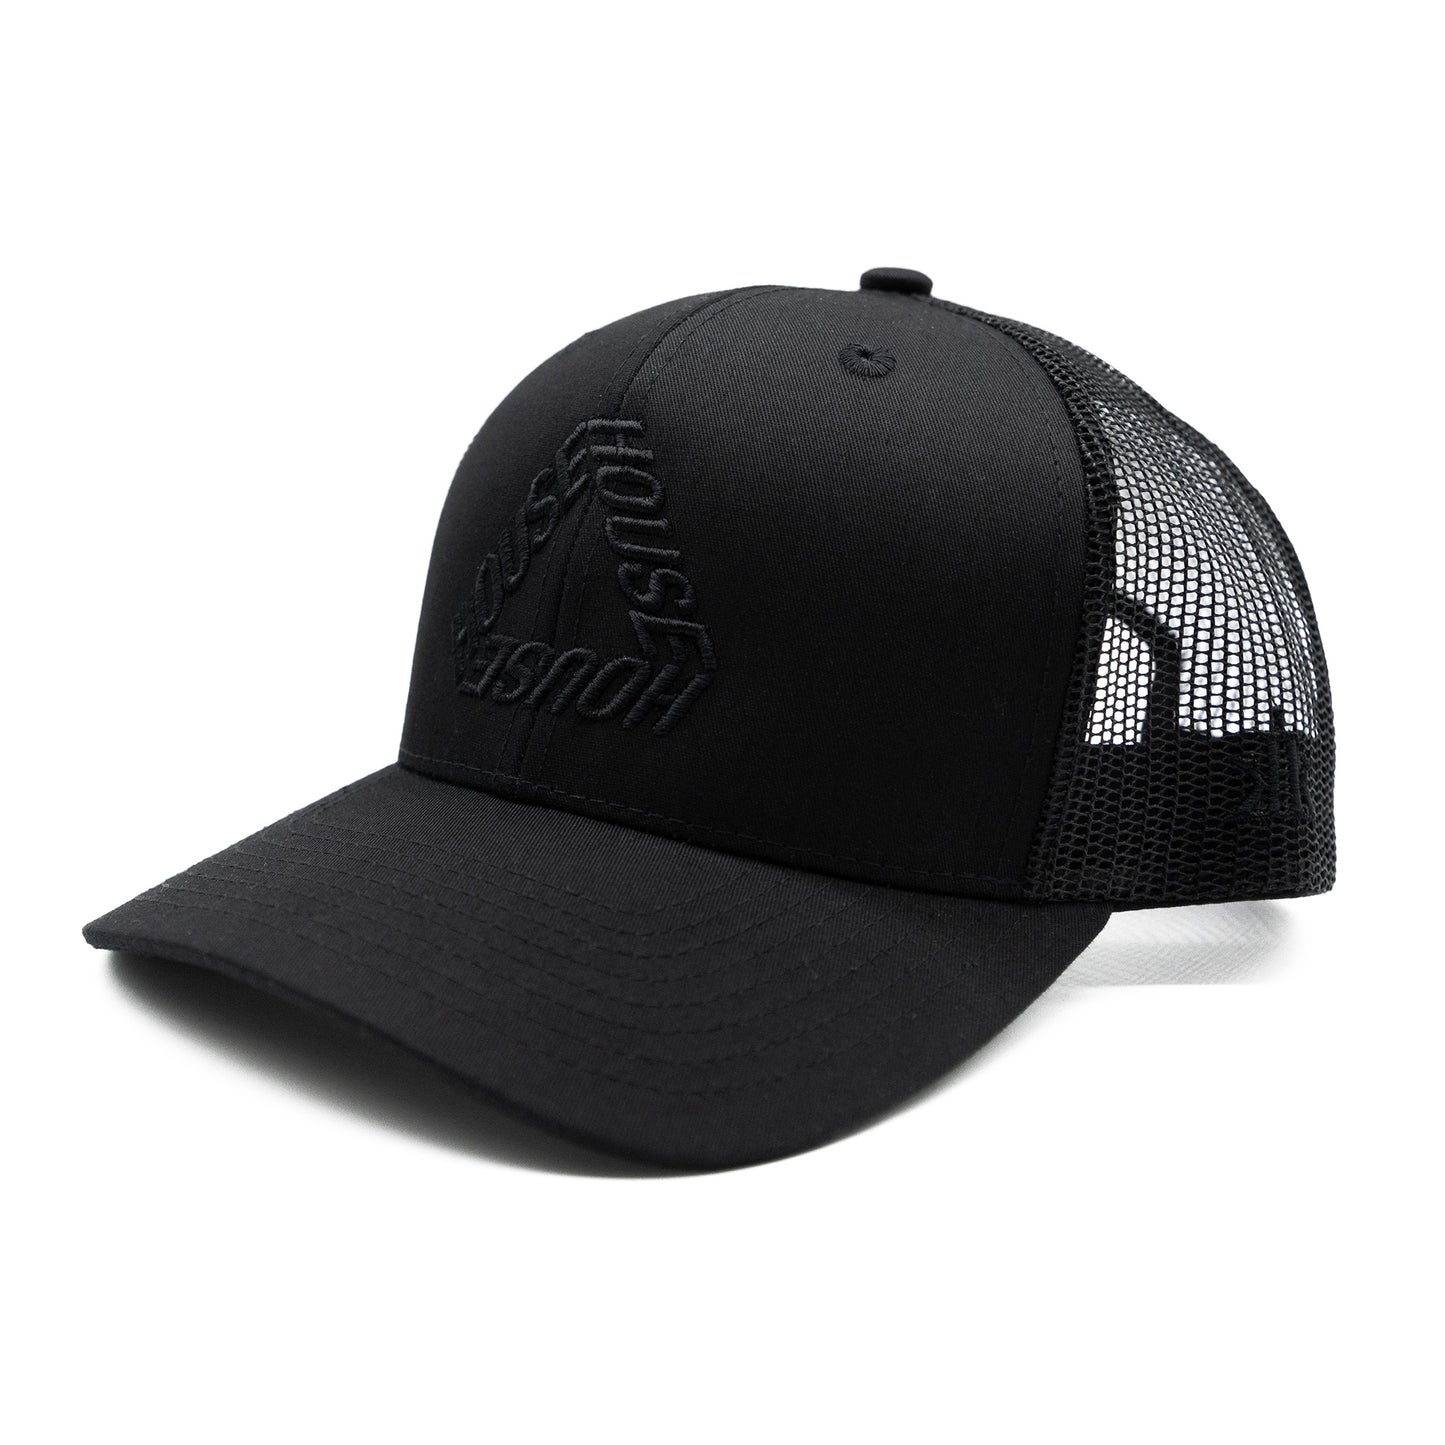 Tri House Trucker Hat / Black - IKendoit.Shop